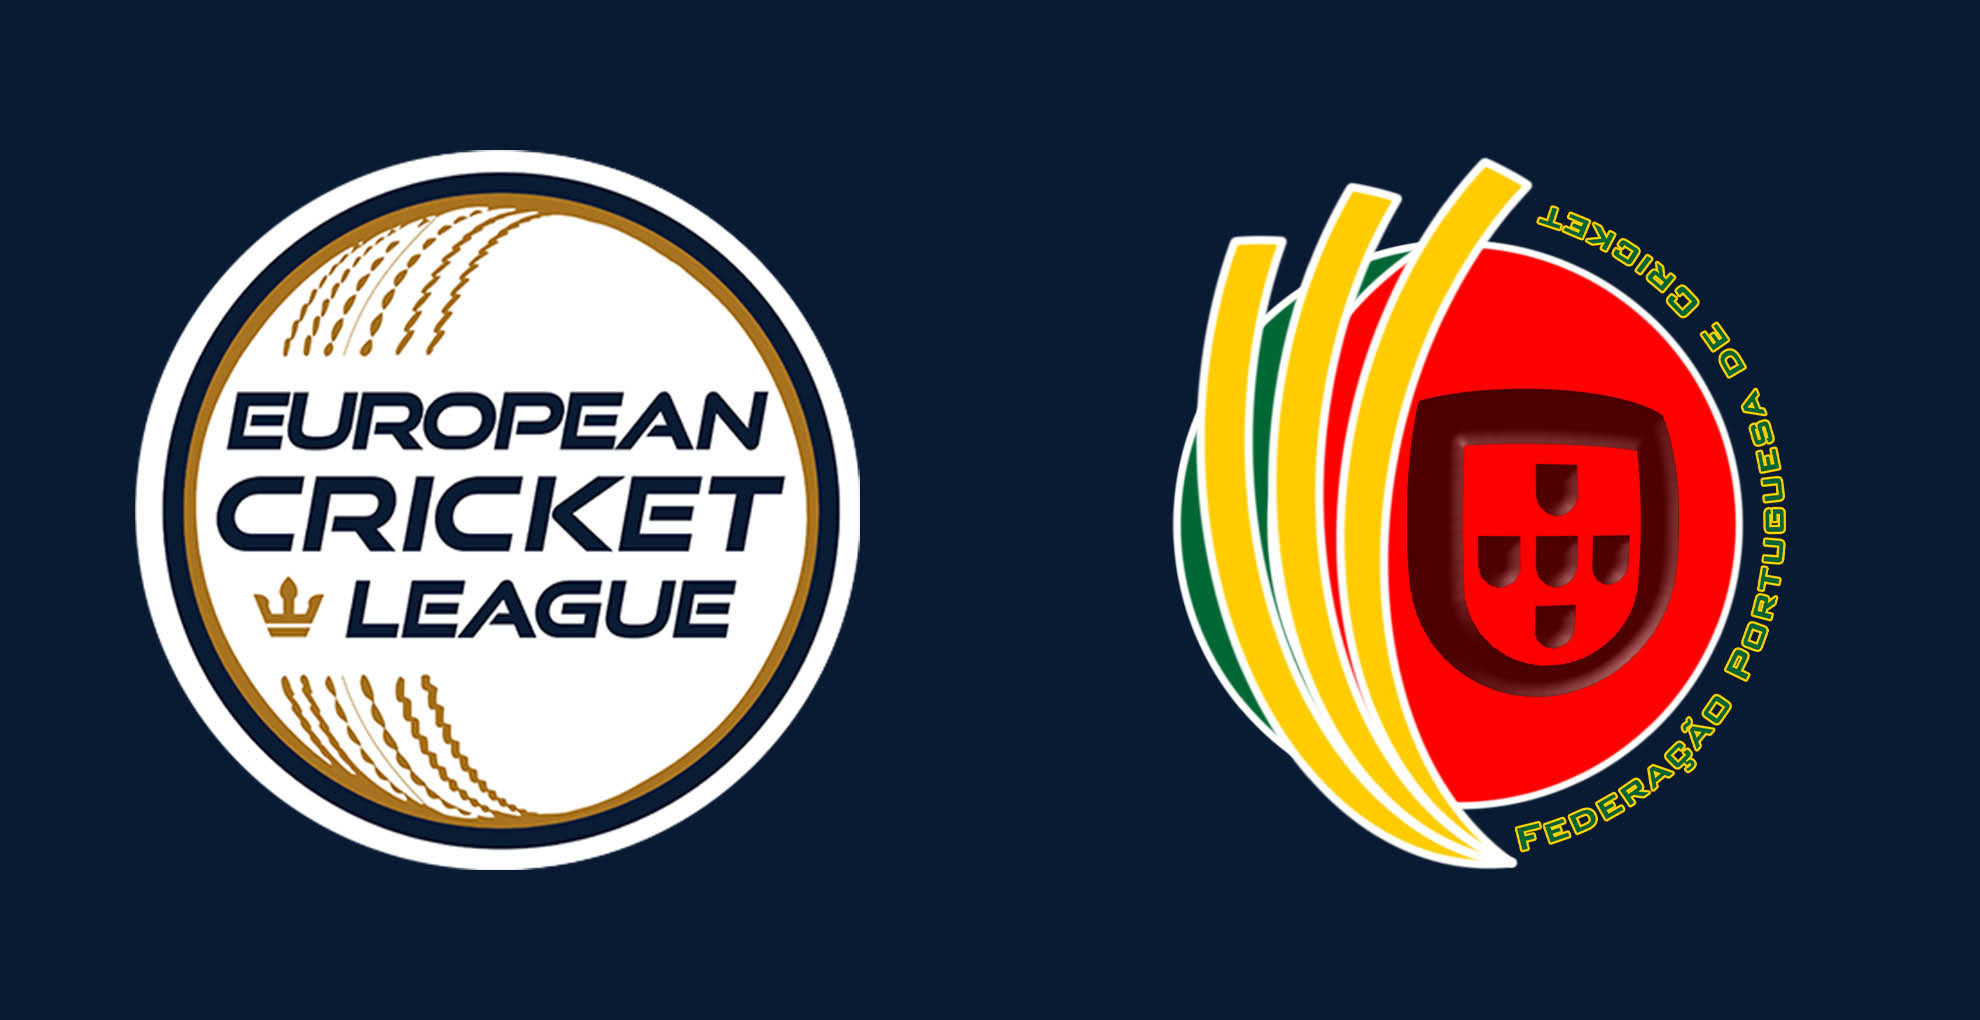 Portugal joins European Cricket League for 2022